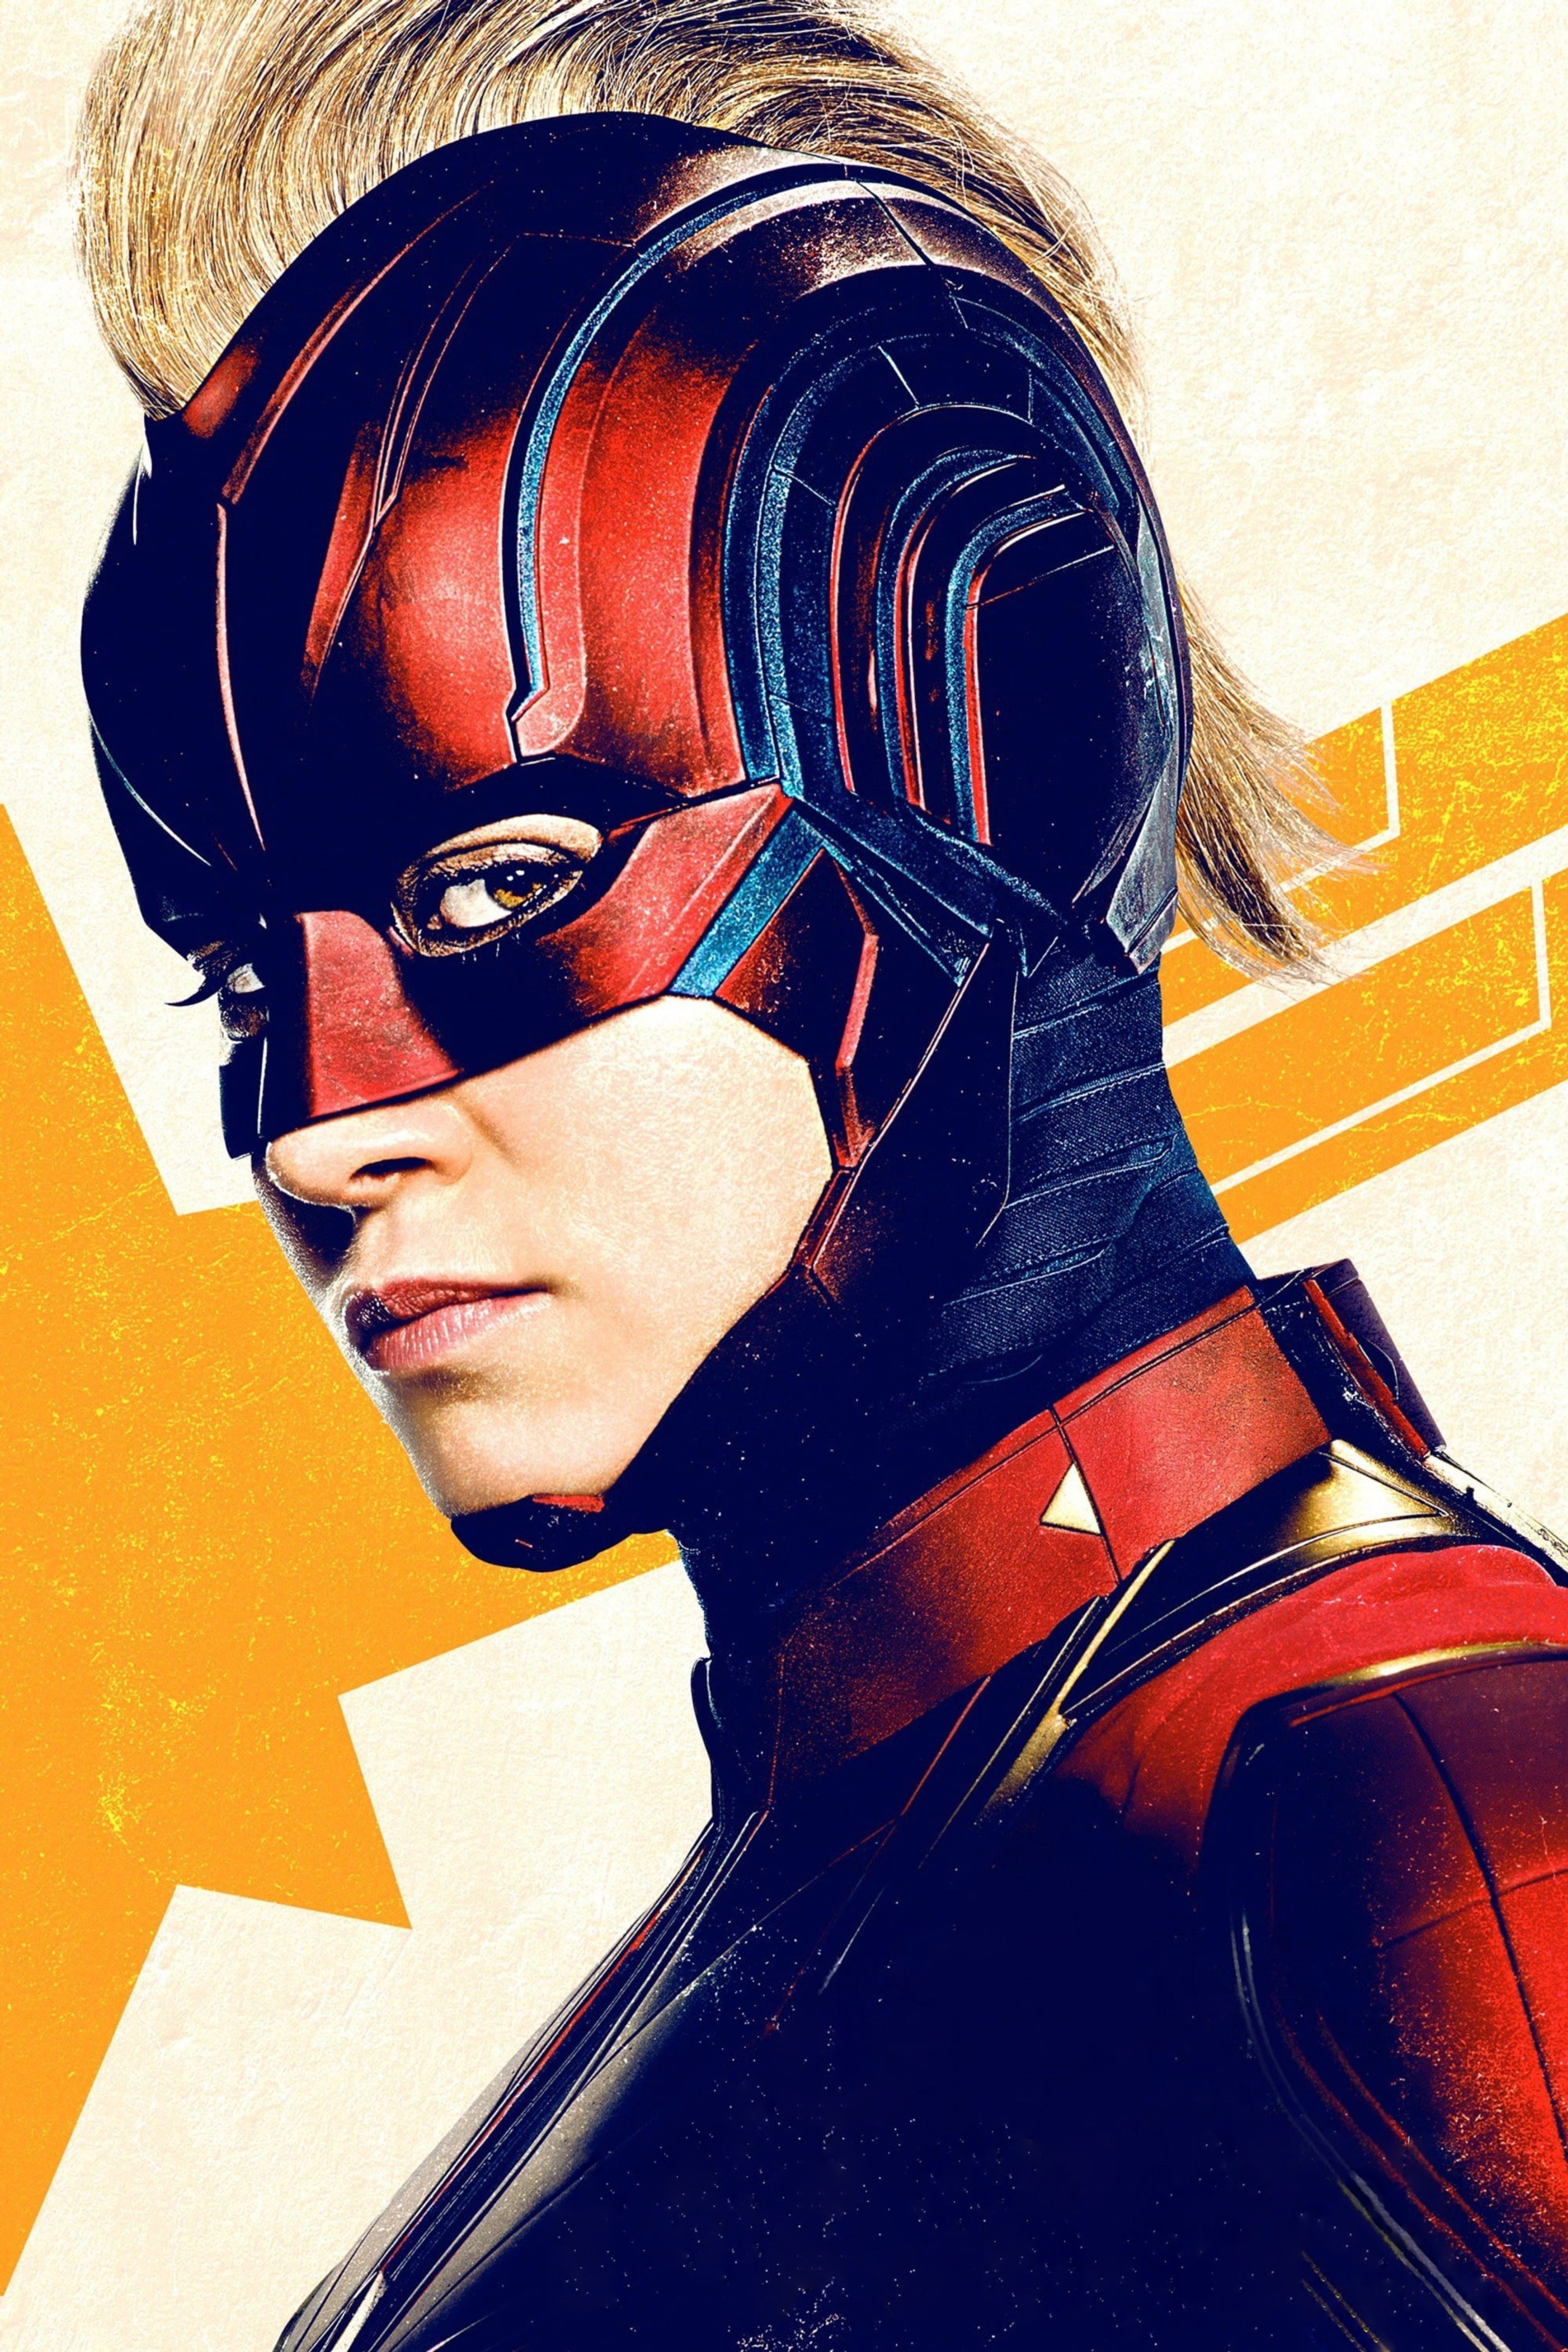 Captain Marvel 2019 Minimal Art Wallpapers